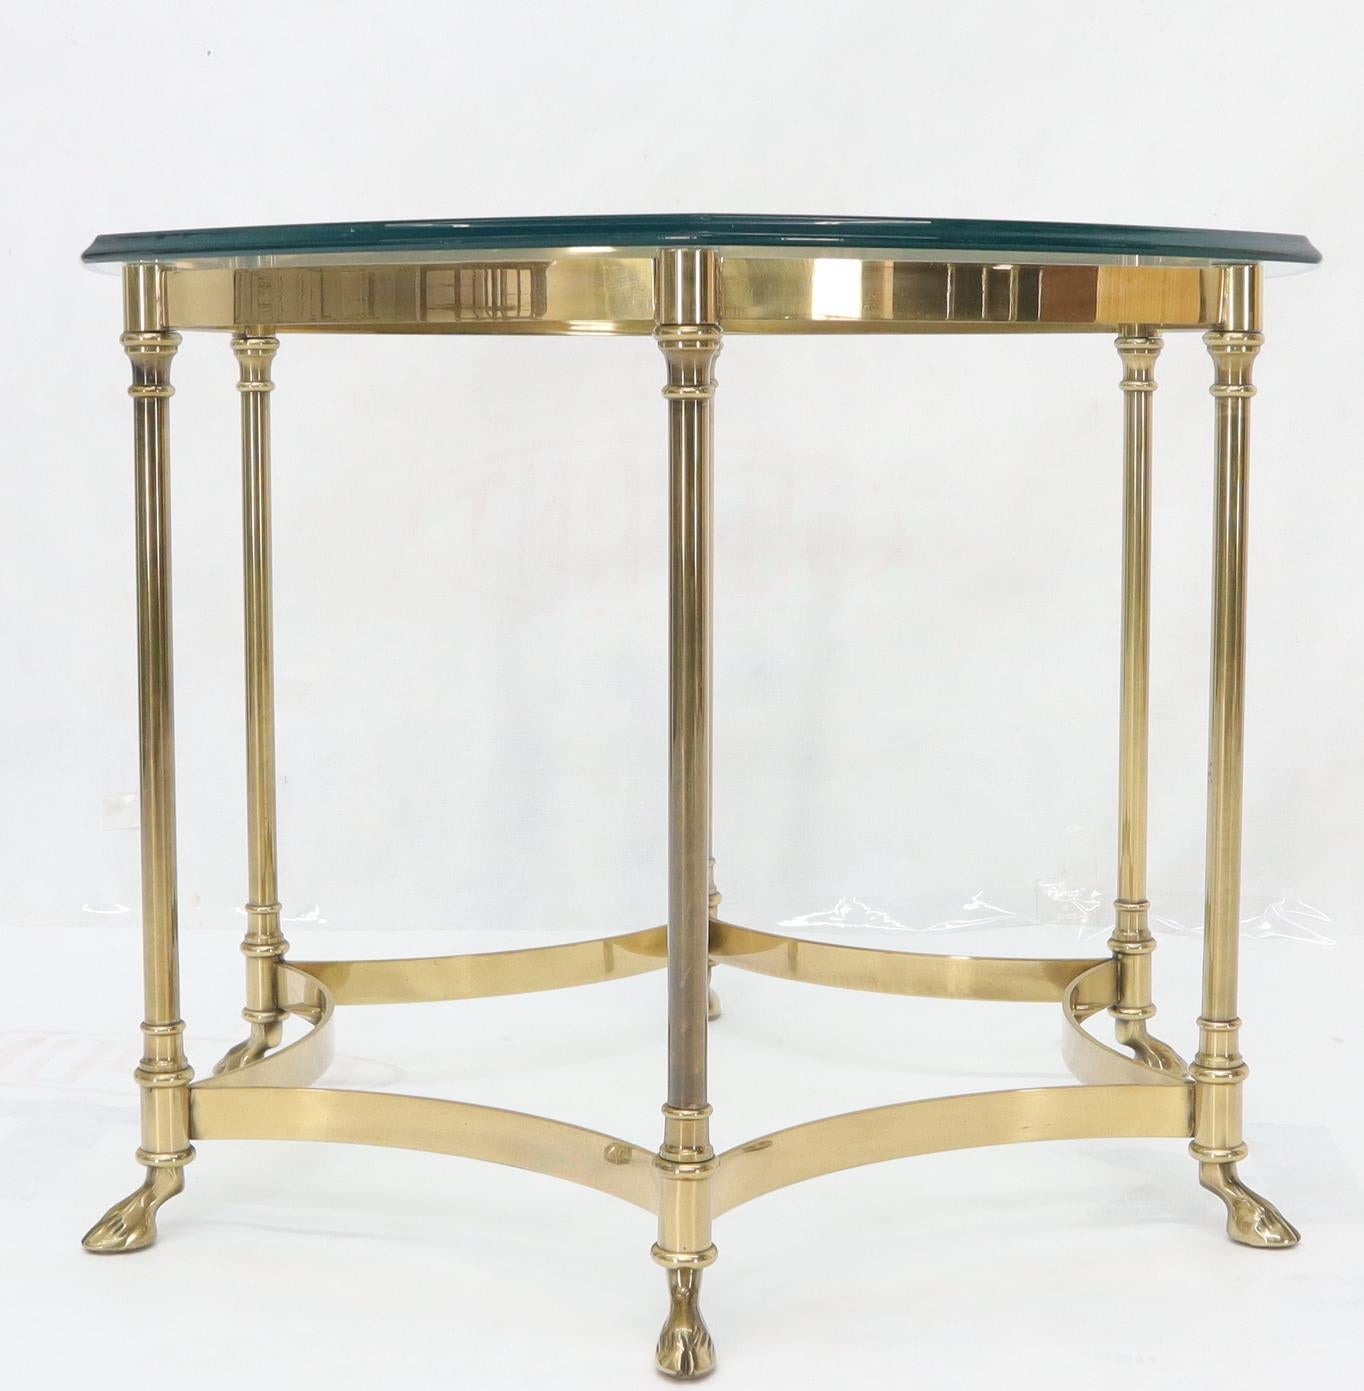 Midcentury Italian modern glass top brass base hoof feet side lamp table stand.